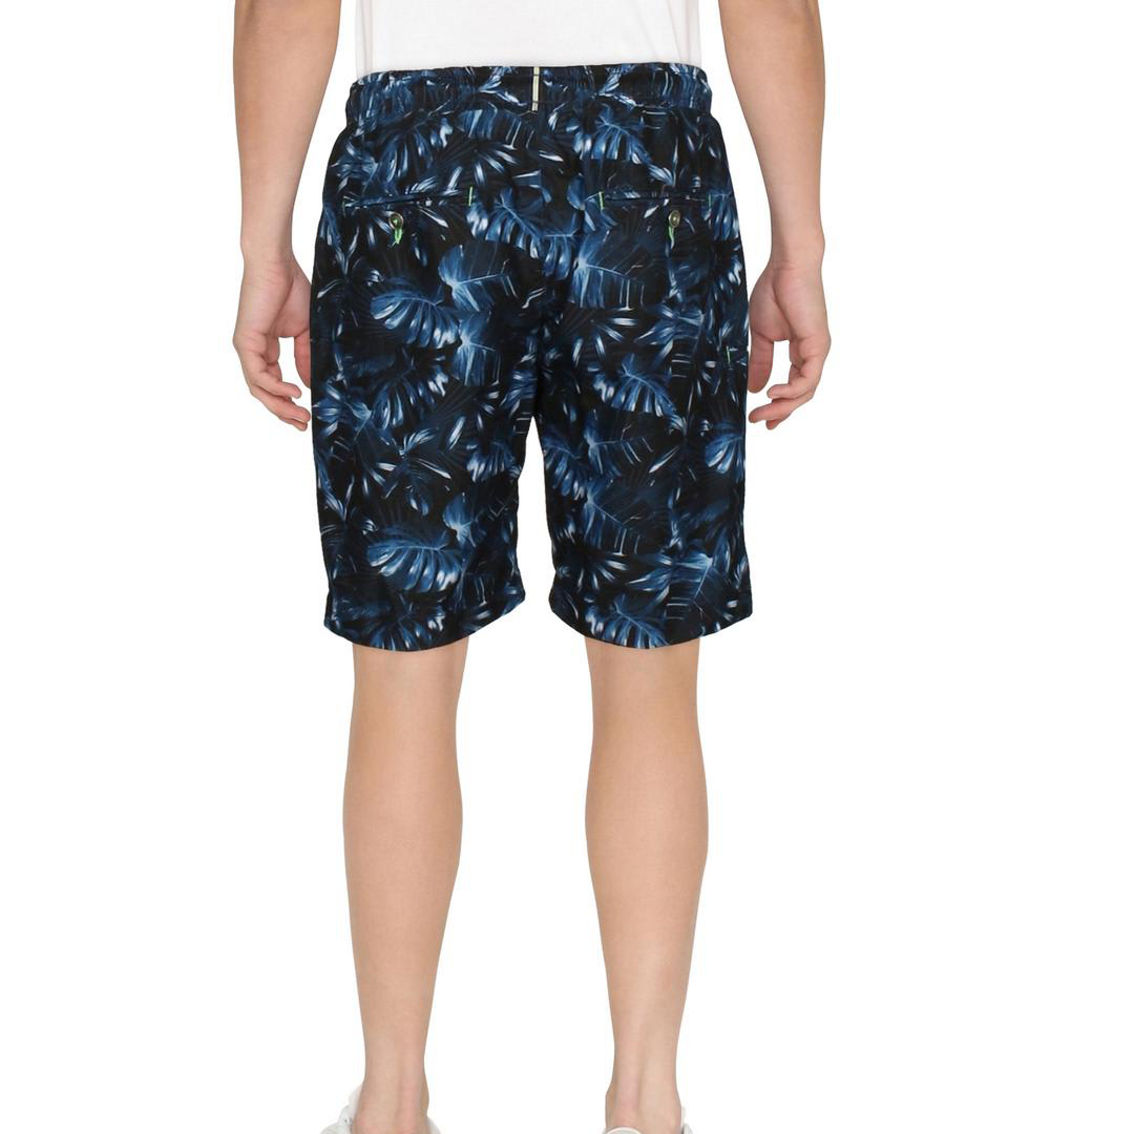 Mens Printed Board Shorts Swim Trunks - Image 2 of 3